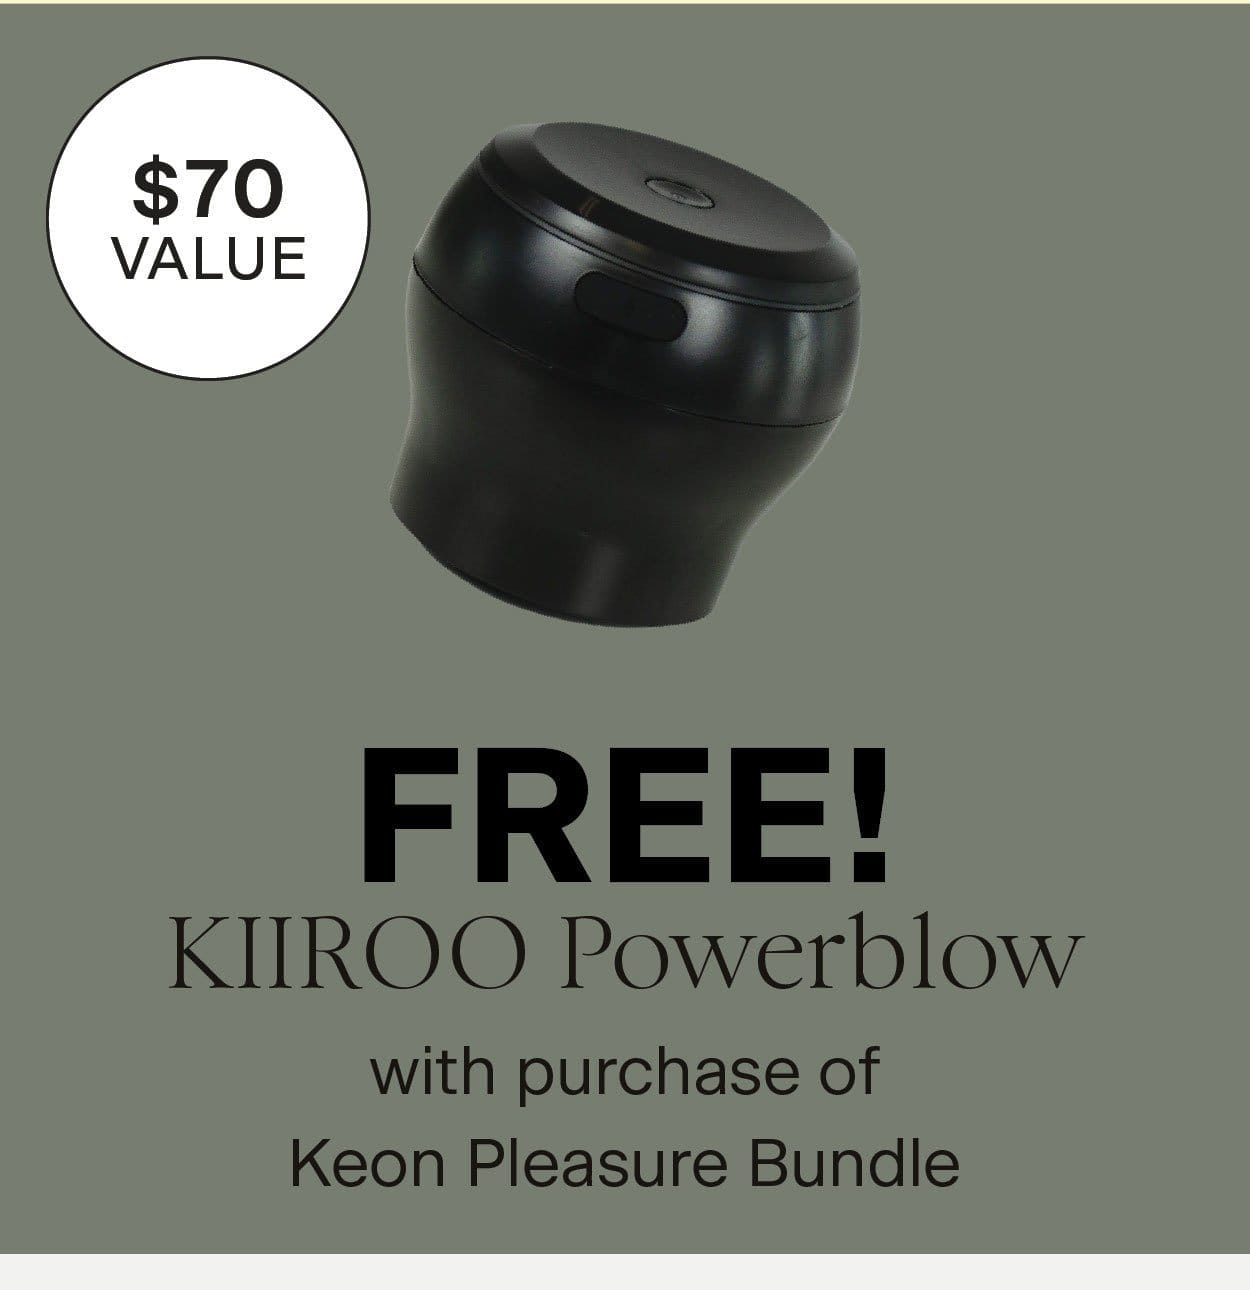 FREE KIIROO Powerblow with purchase of keon pleasure bundle